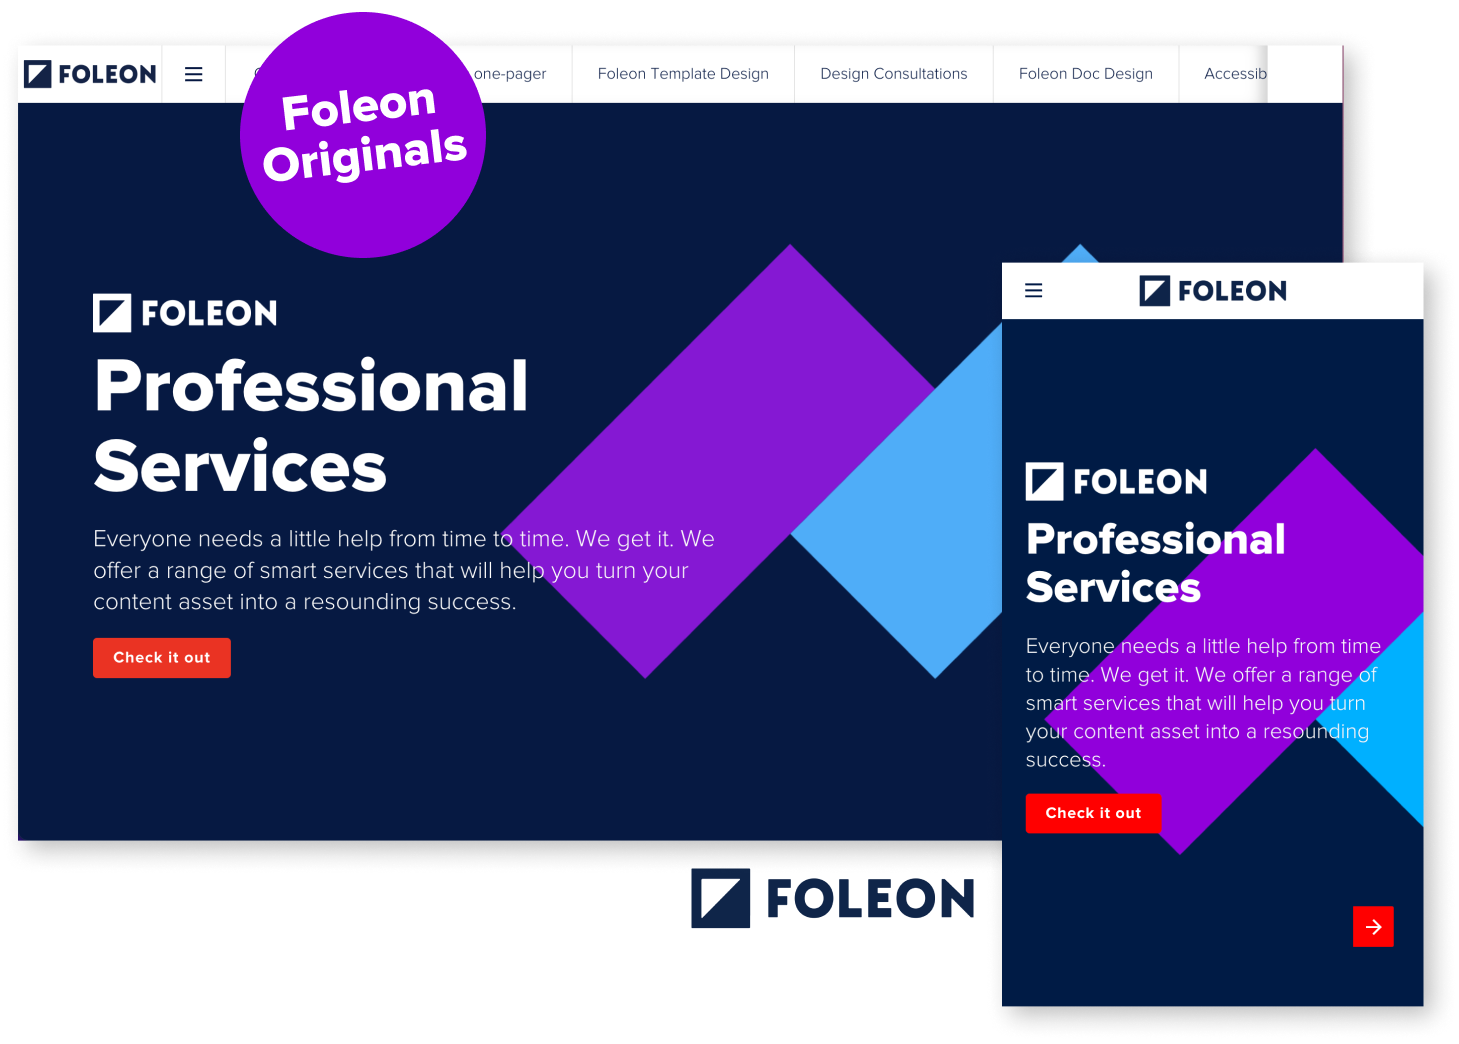 Foleon catalog